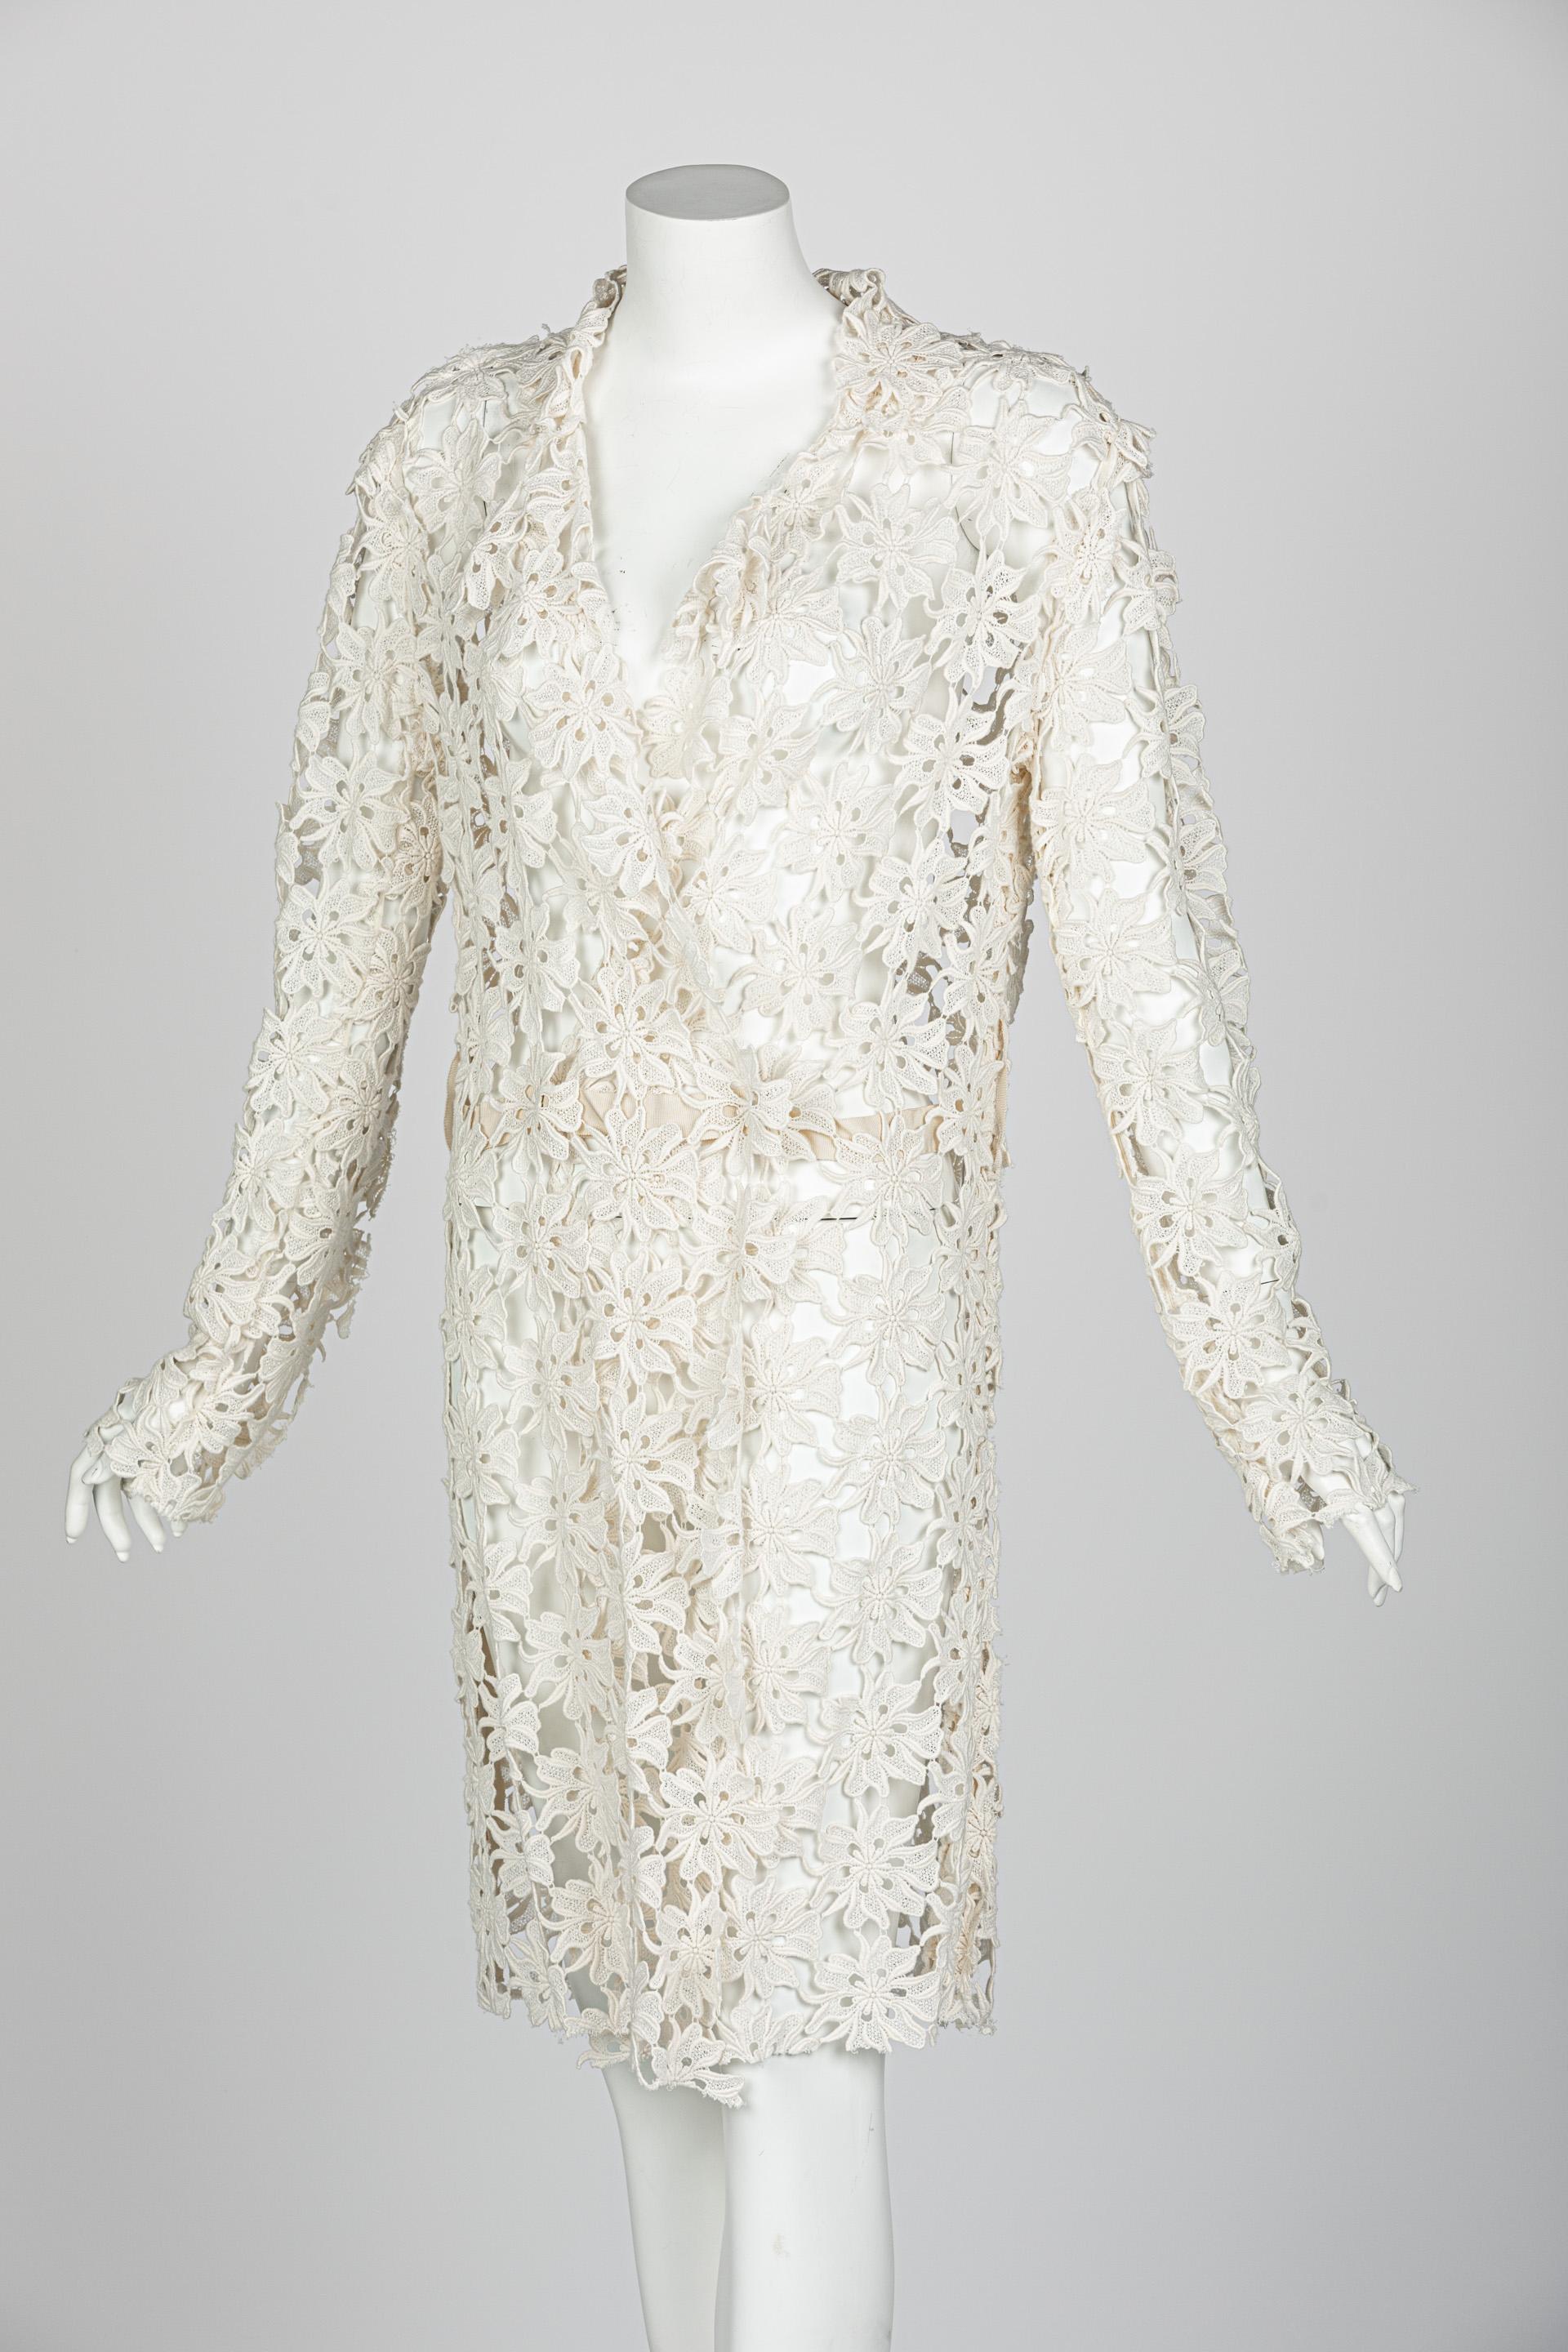 Women's Lanvin Alber Elbaz Collection Blanche Ivory Guipure Lace Coat 2013